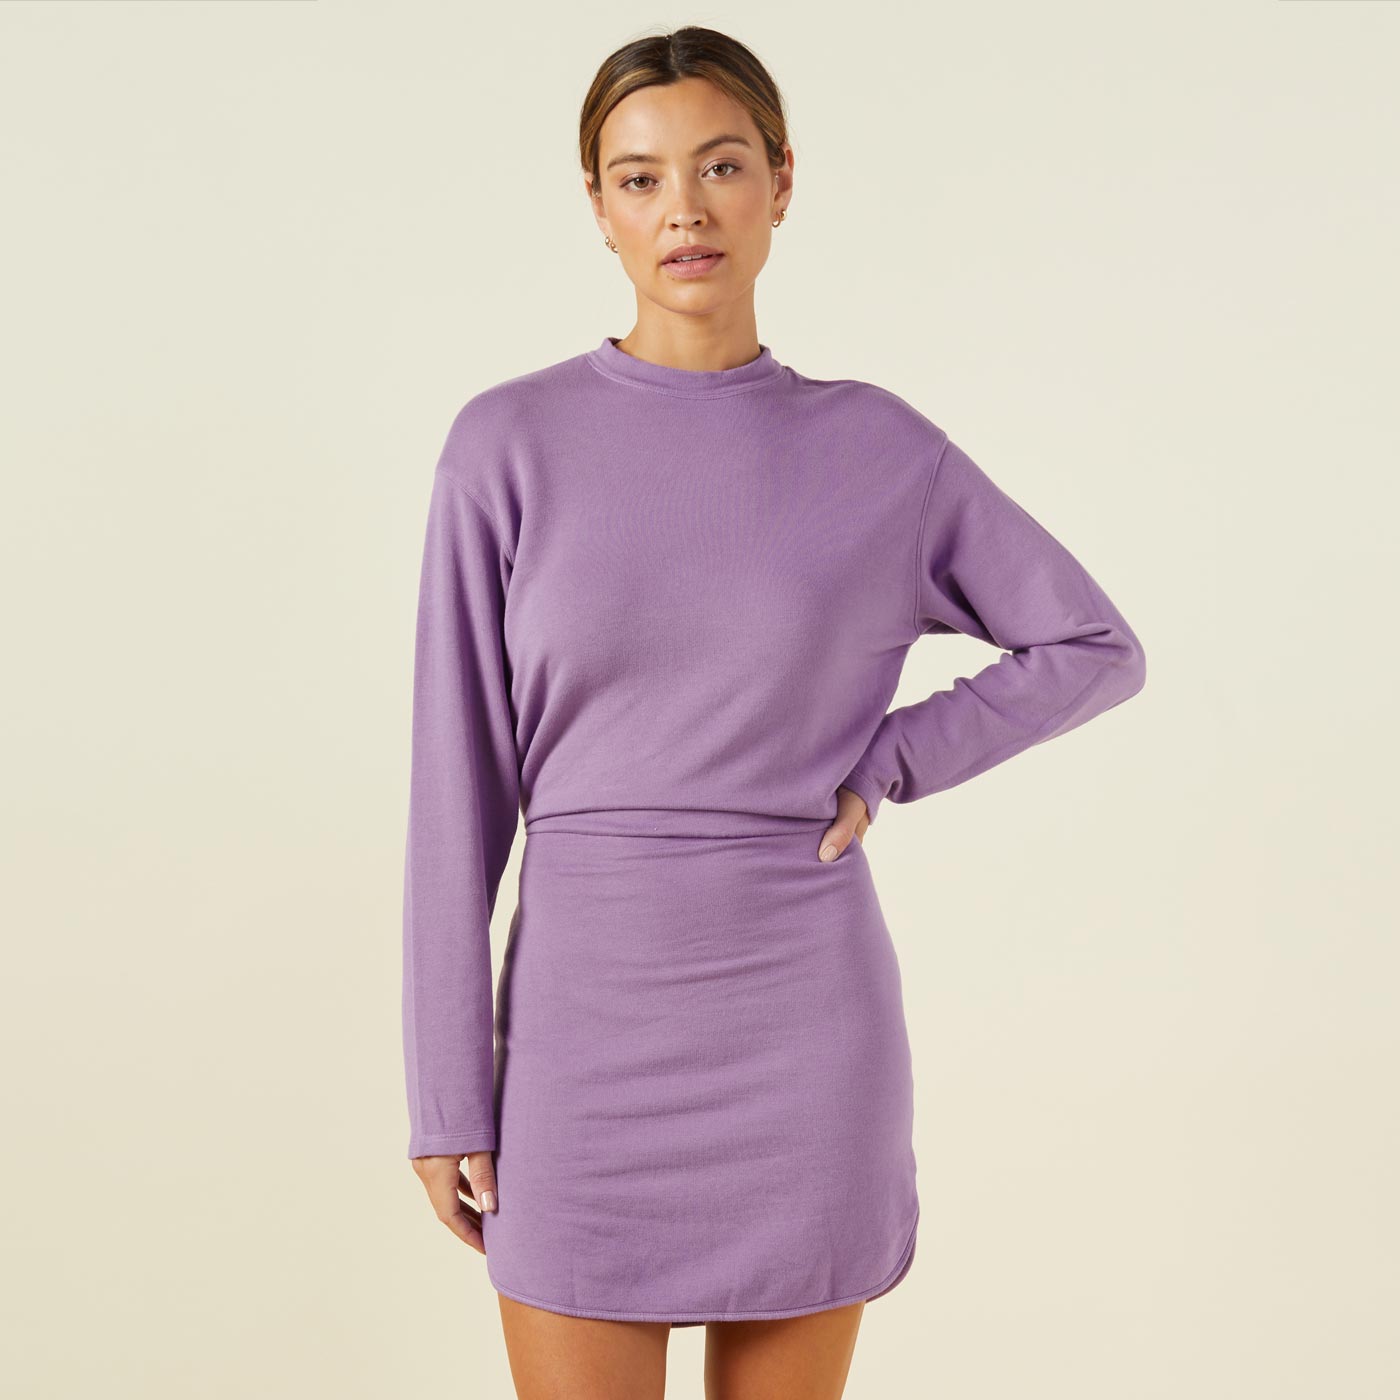 Front view of model wearing the supersoft fleece sweatshirt dress in aster purple.